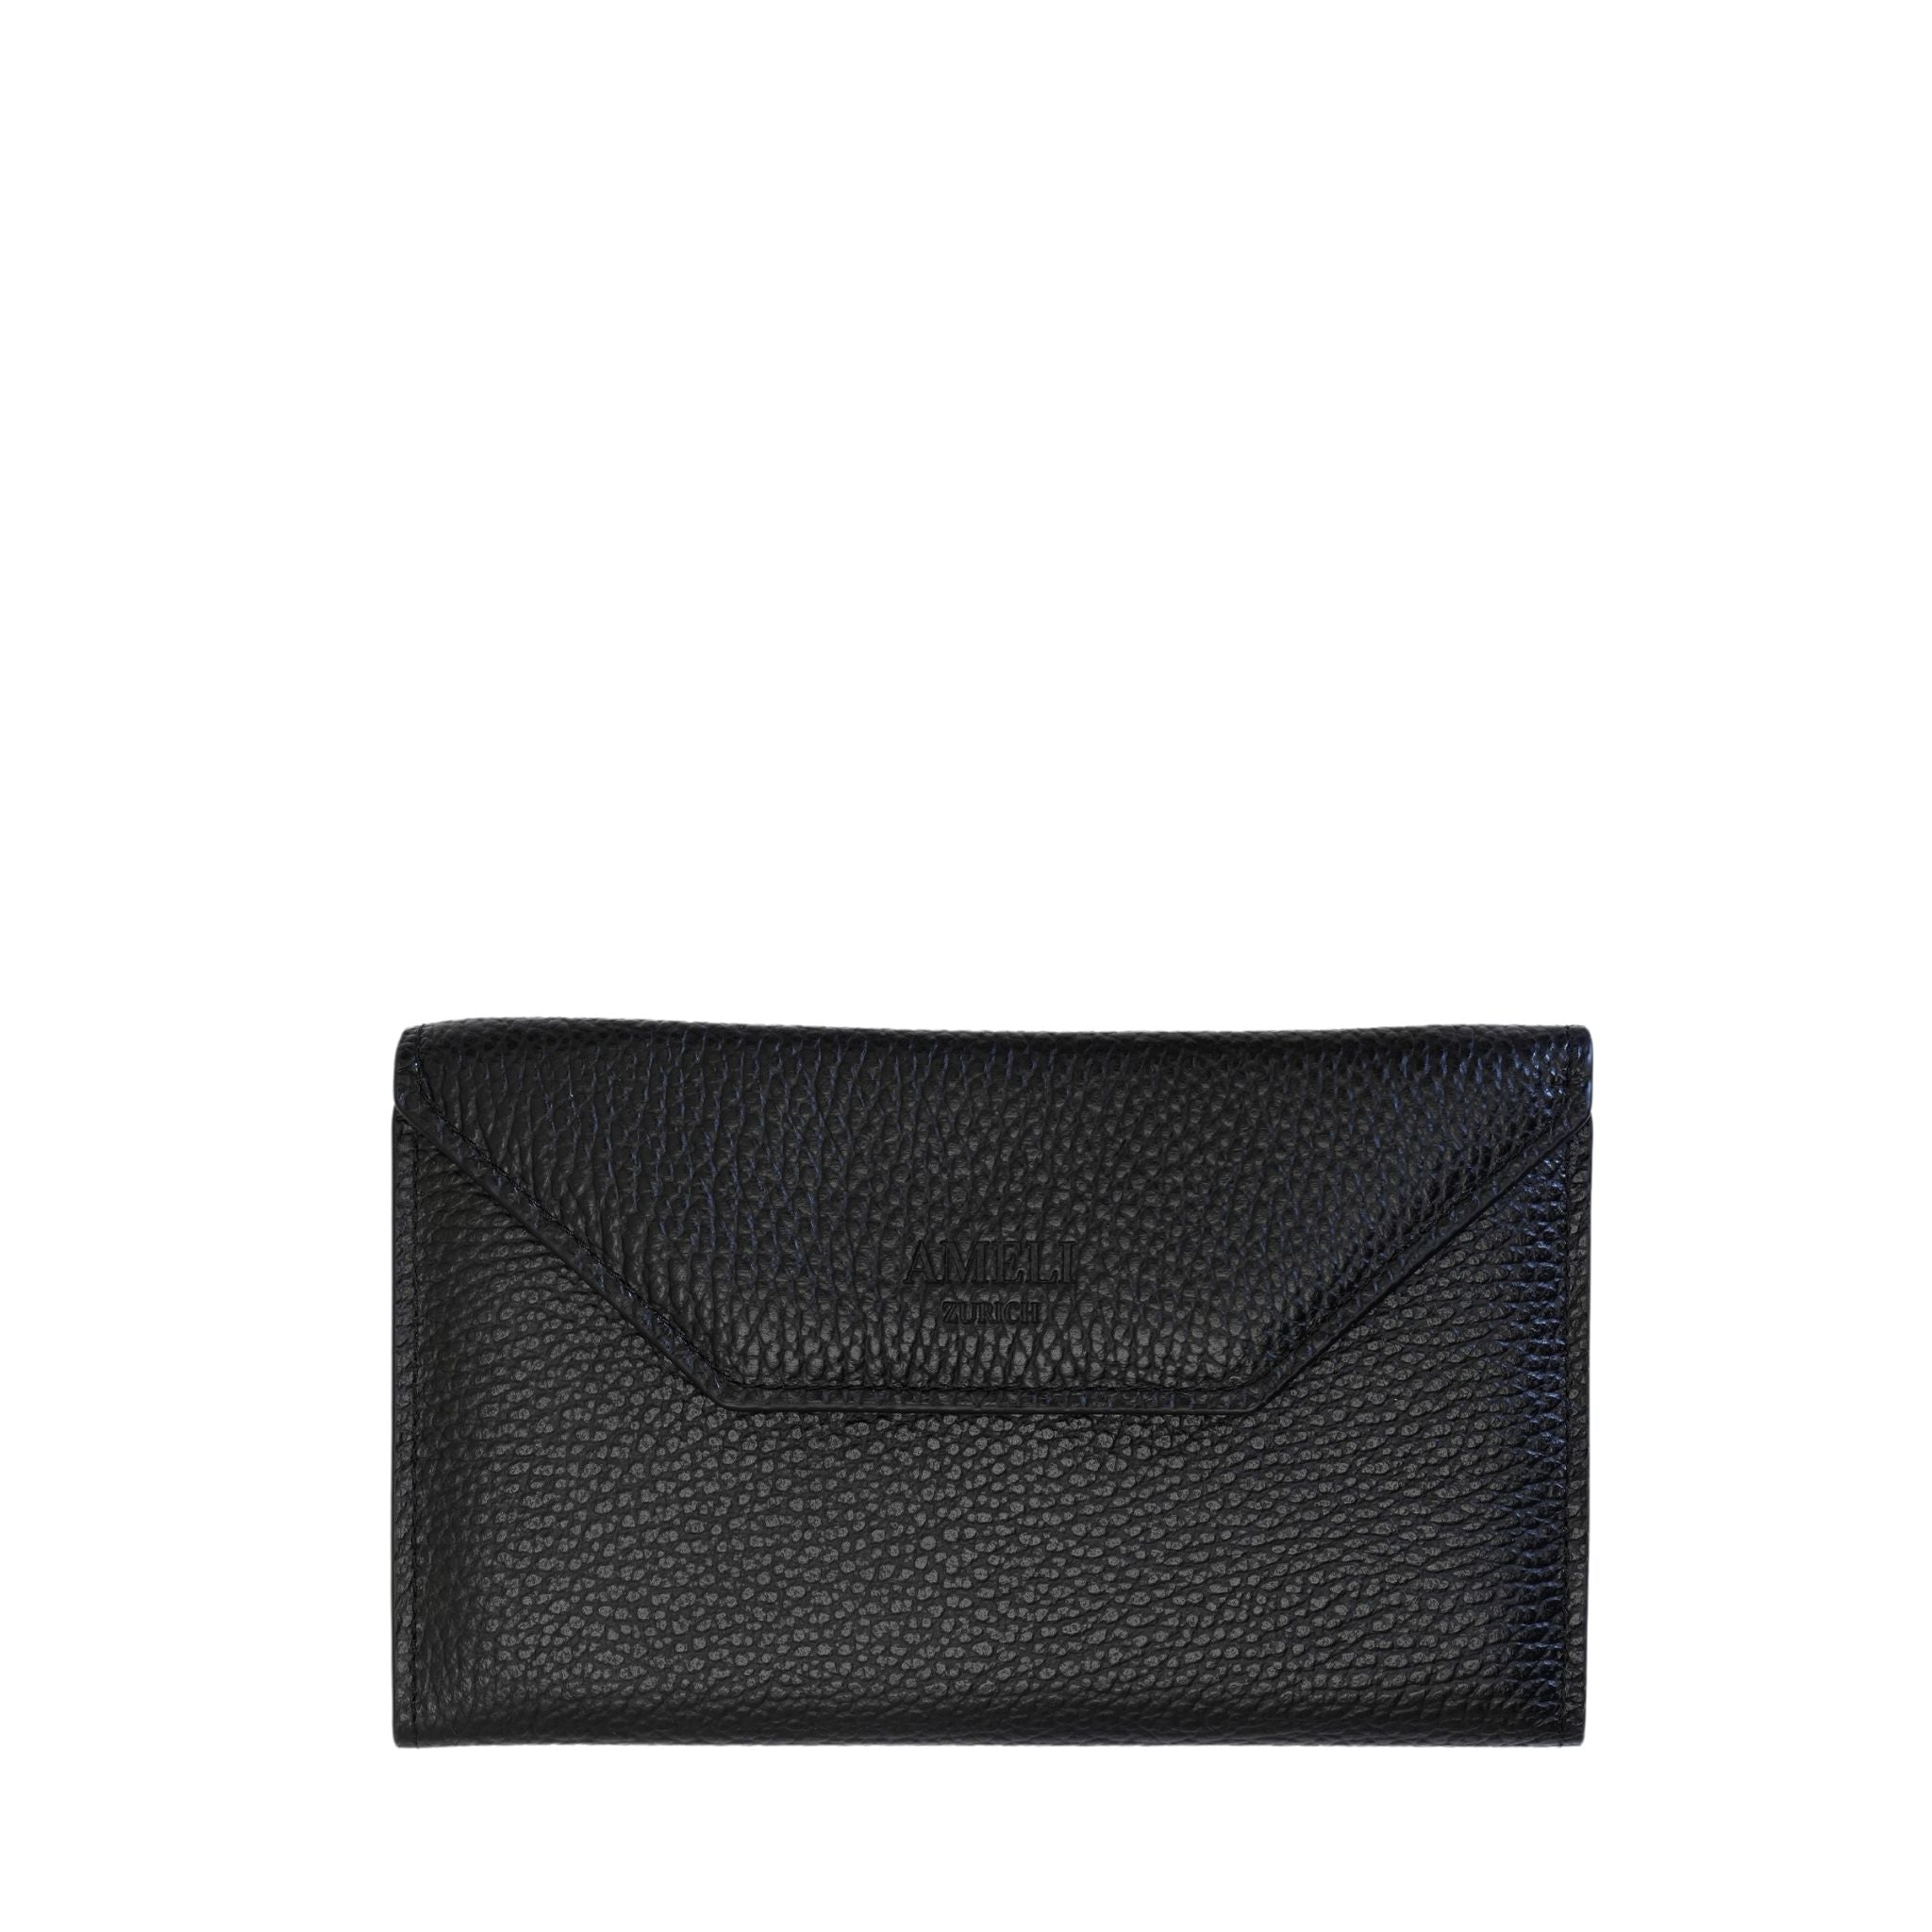 AMELI Zurich | Wallet | Black | Soft Grain Leather | Front